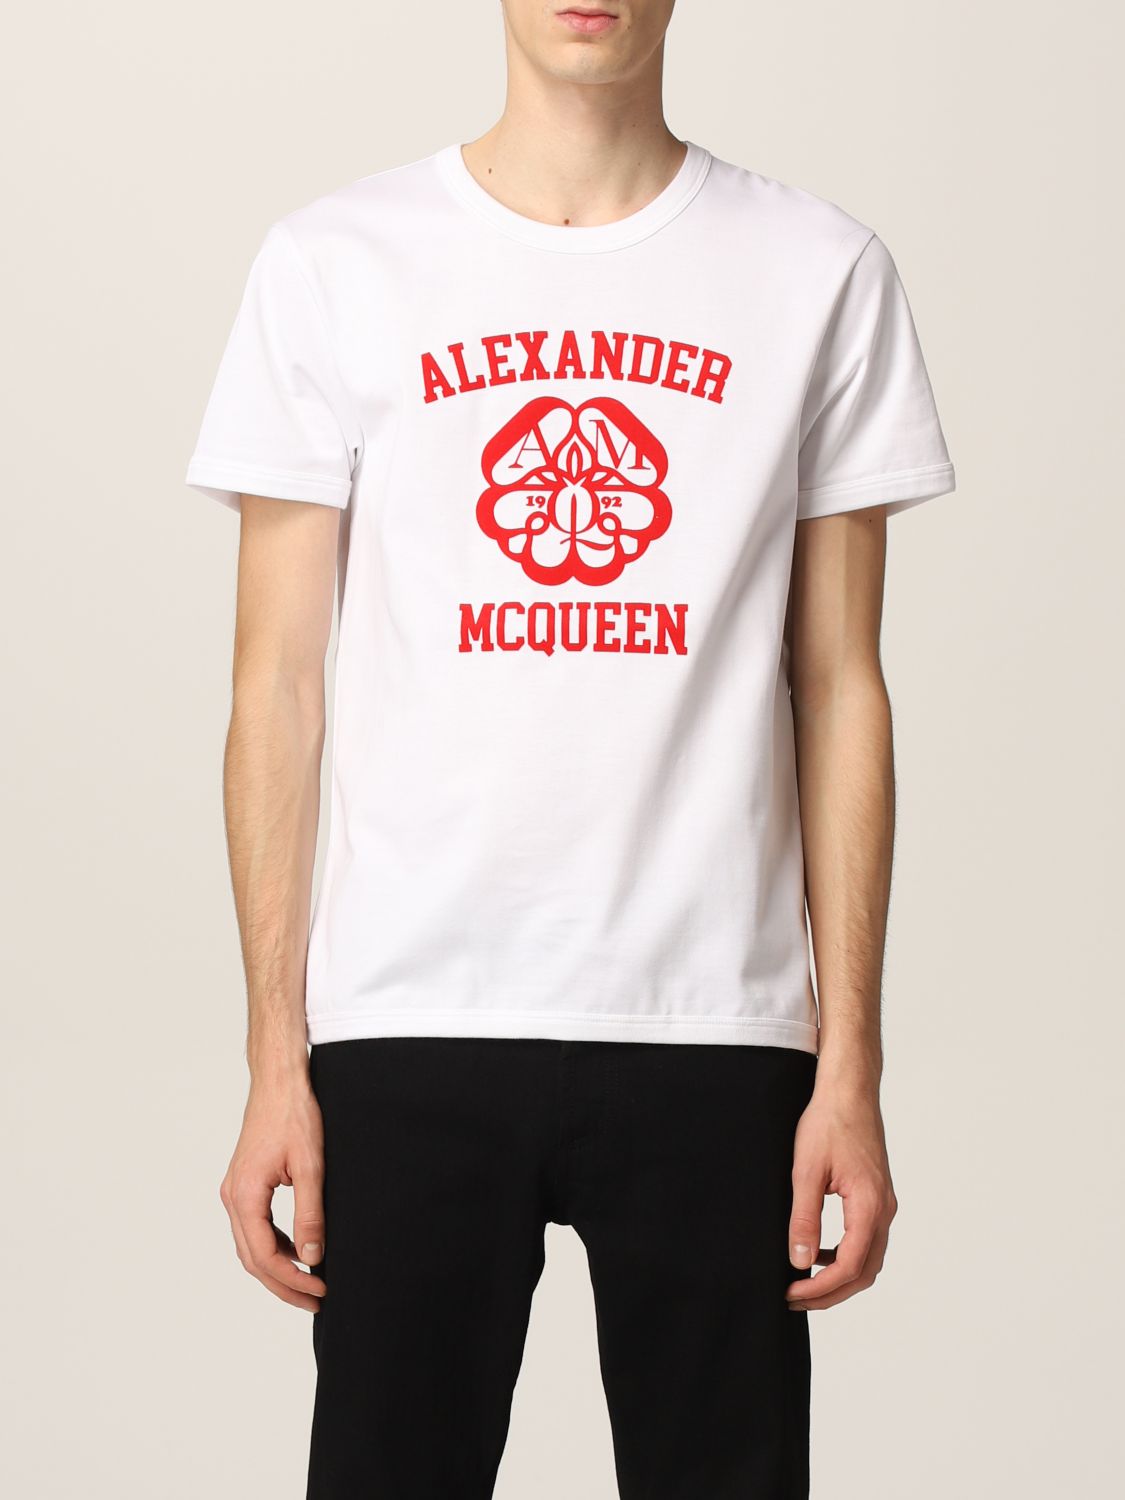 ALEXANDER MCQUEEN: t-shirt with logo - White | Alexander Mcqueen t